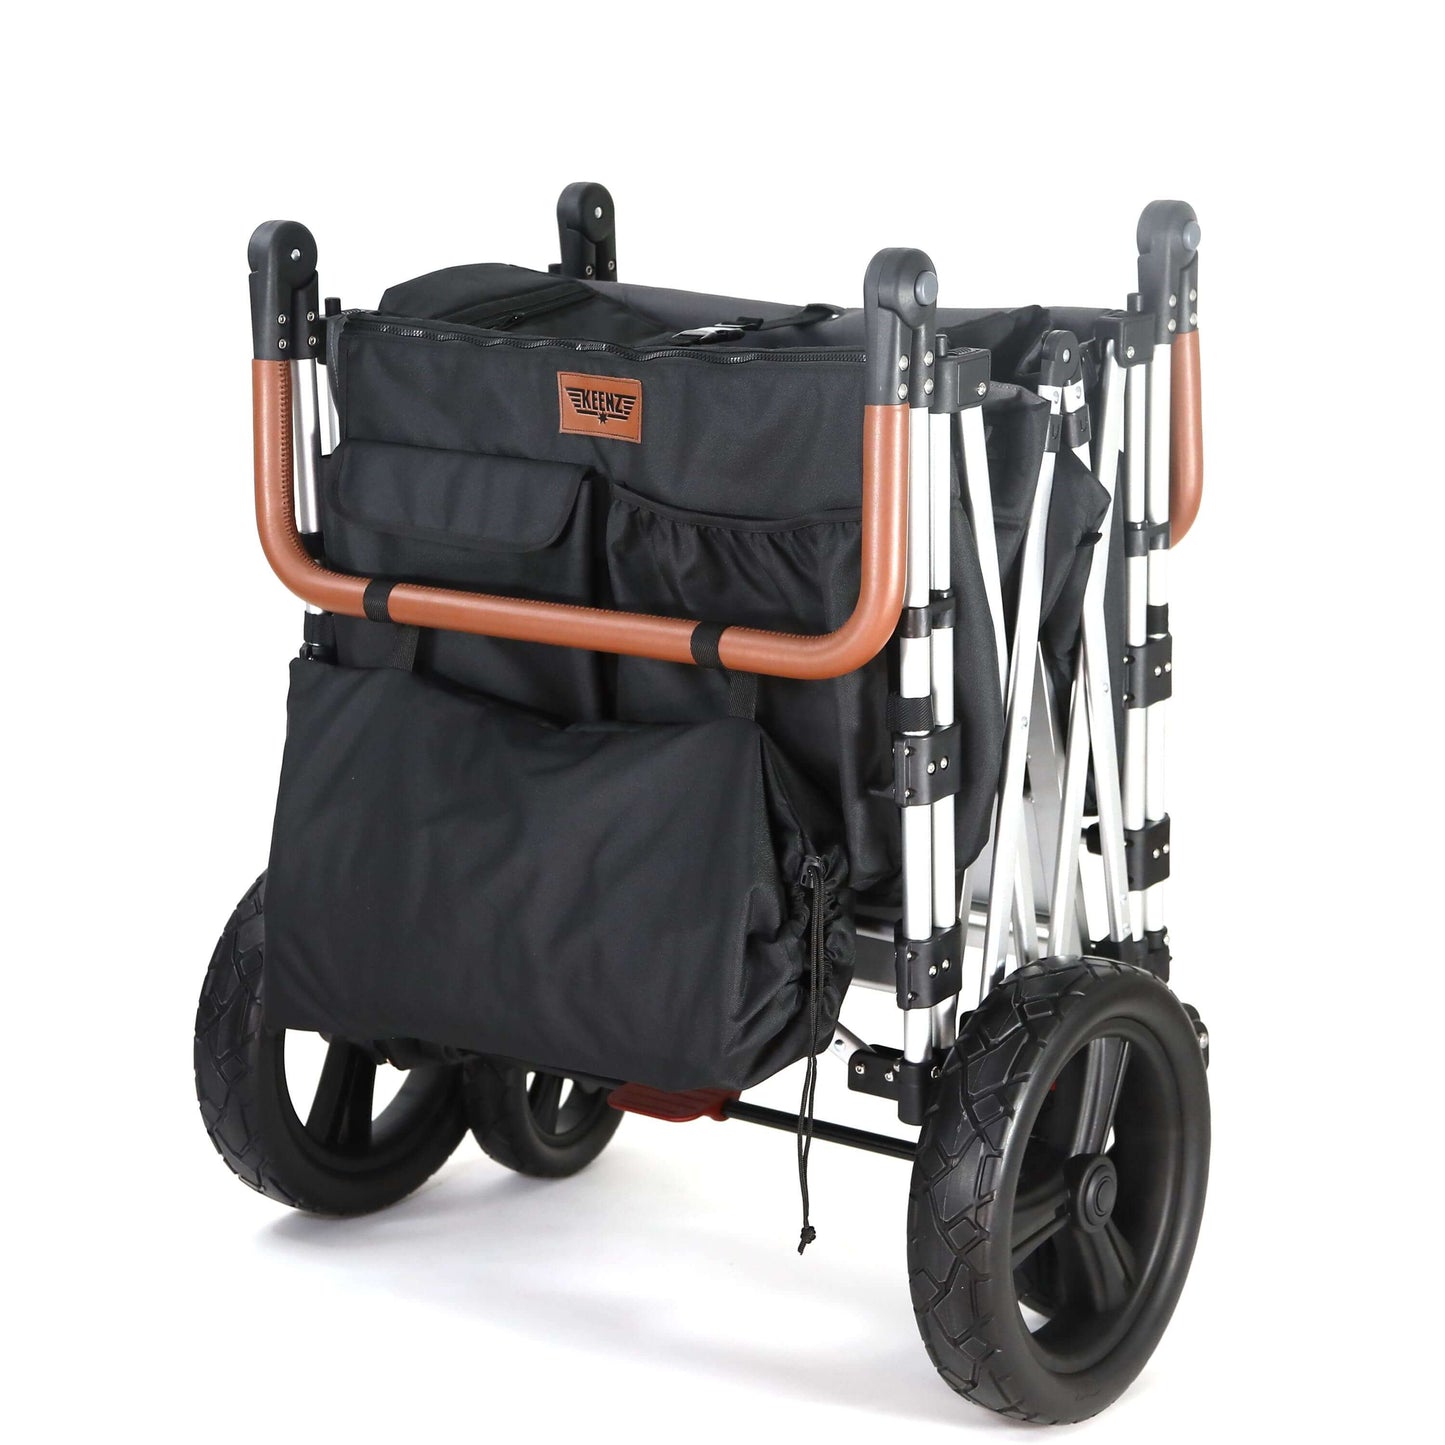 Keenz 7S+ - Adventure Stroller Wagon - 4 Passenger - Black-Grey